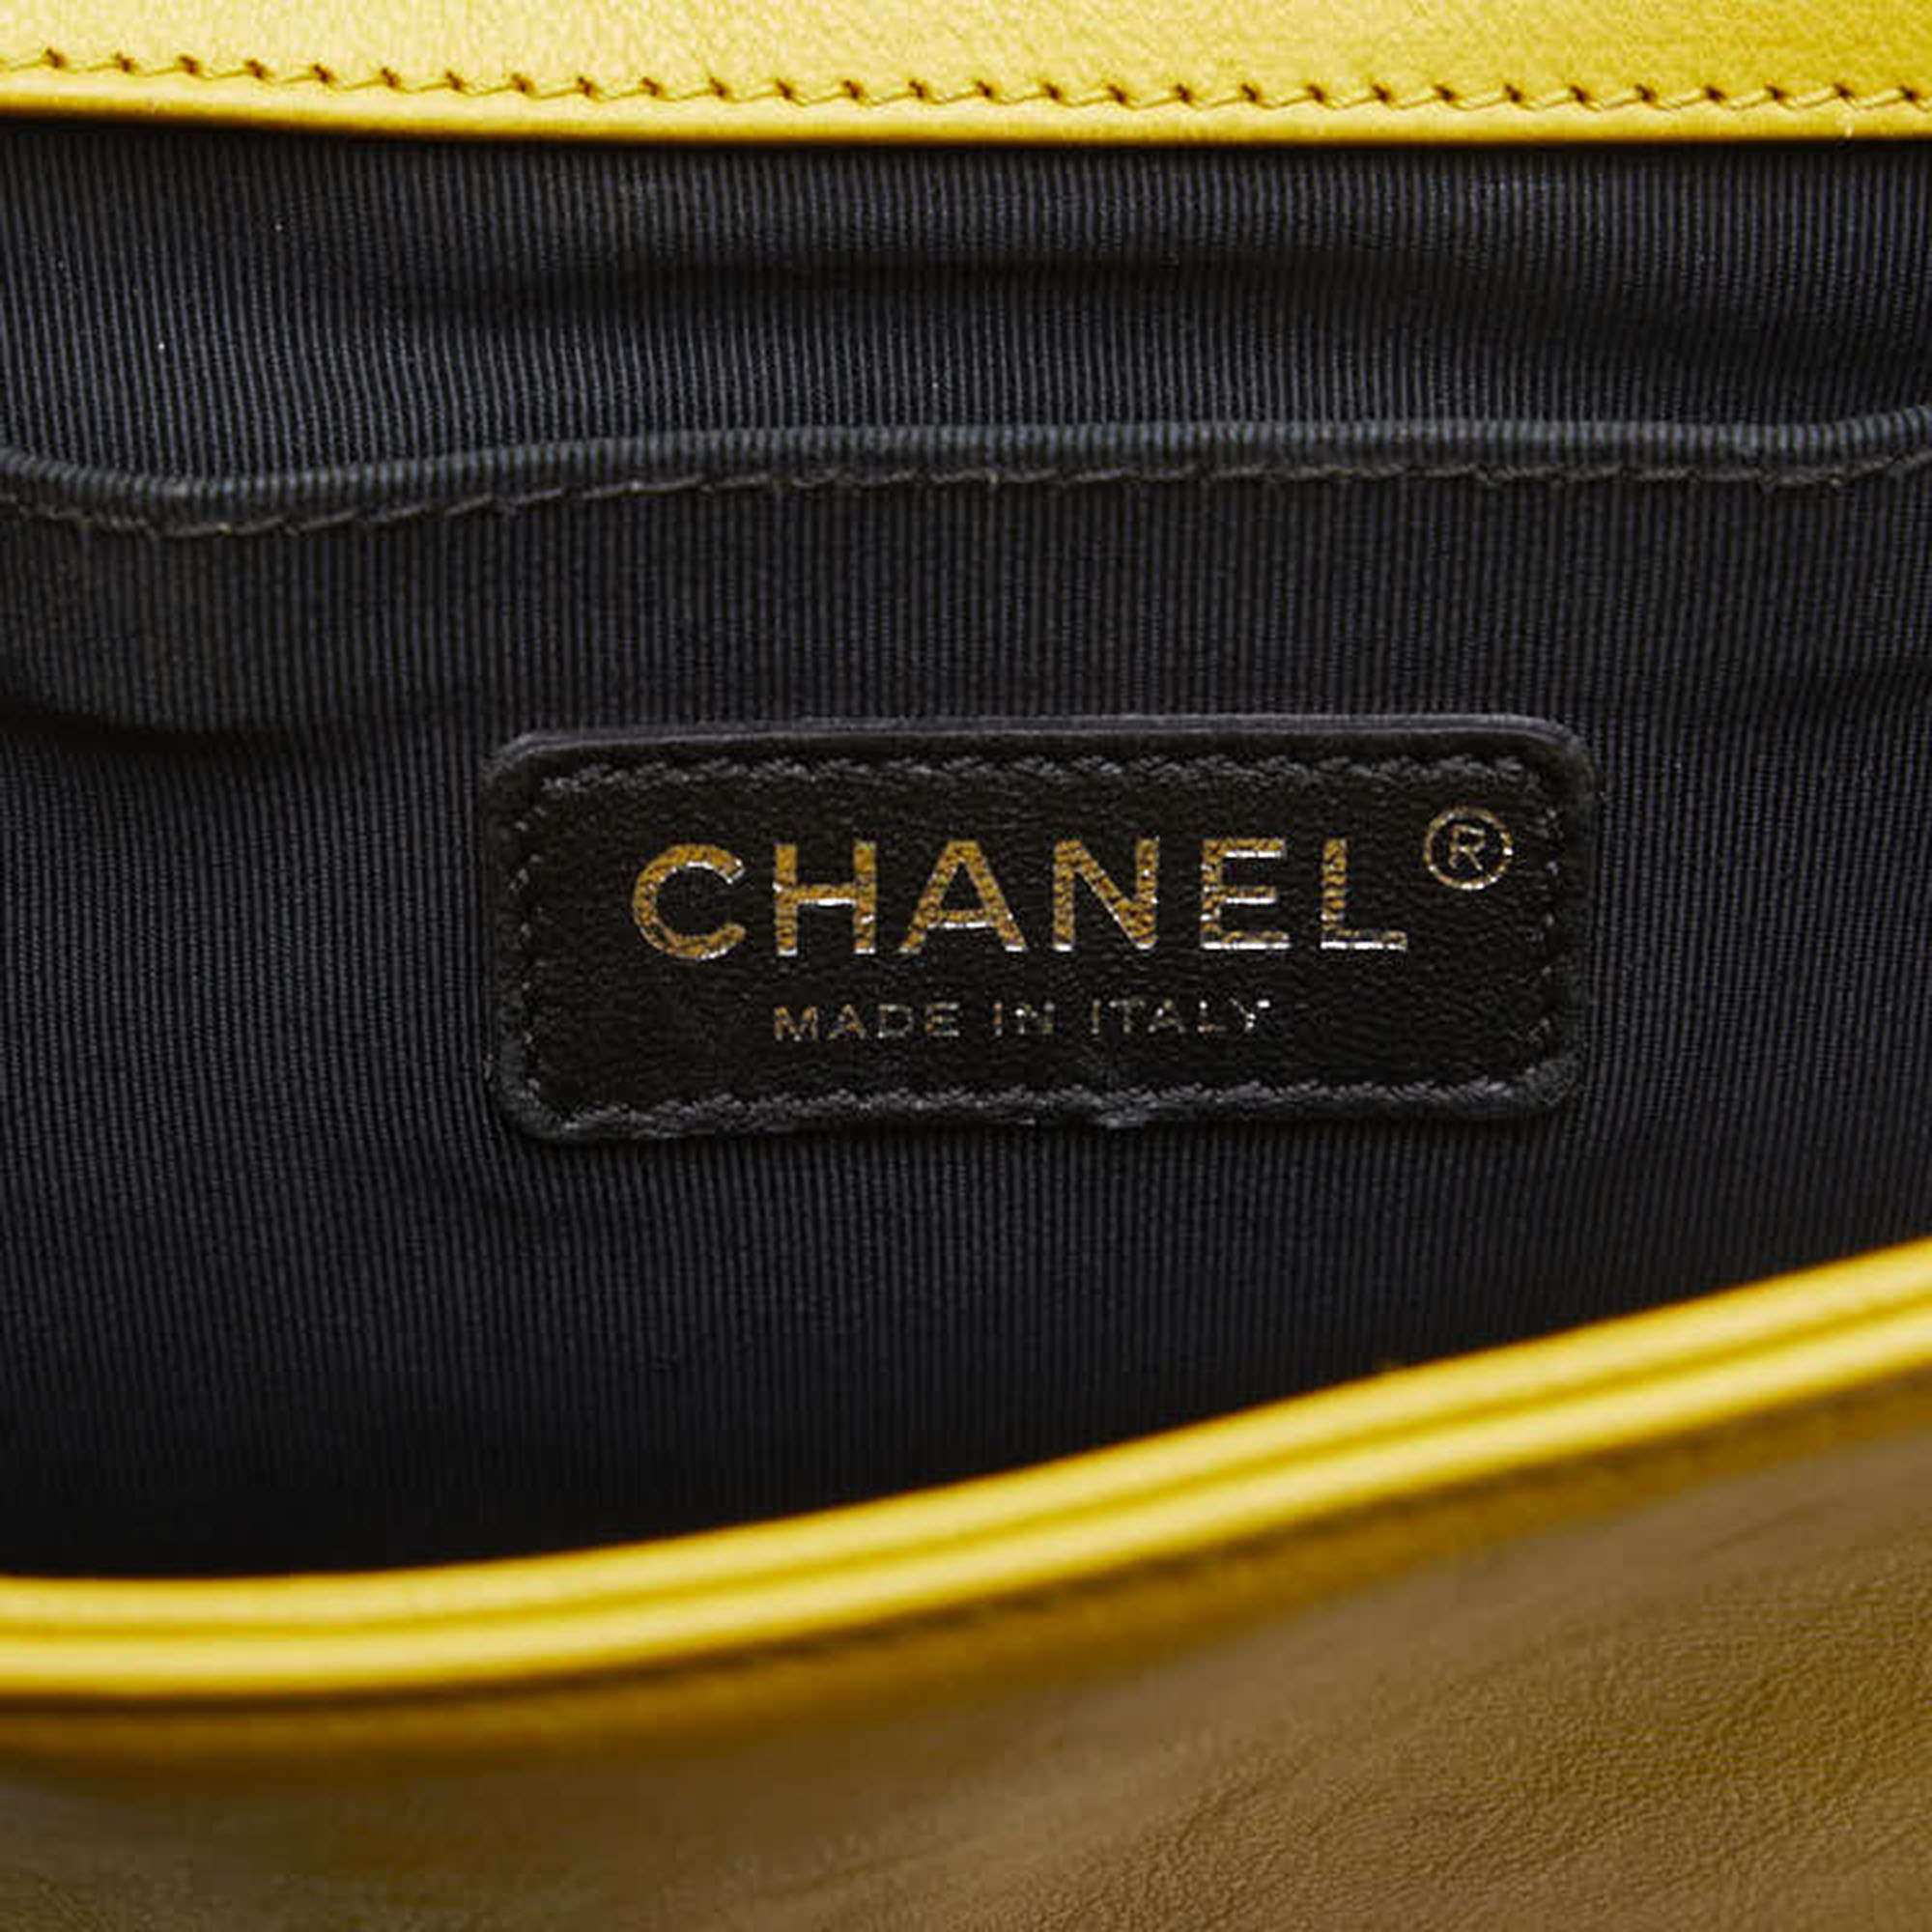 Chanel Yellow Medium Classic Le Boy Flap Bag